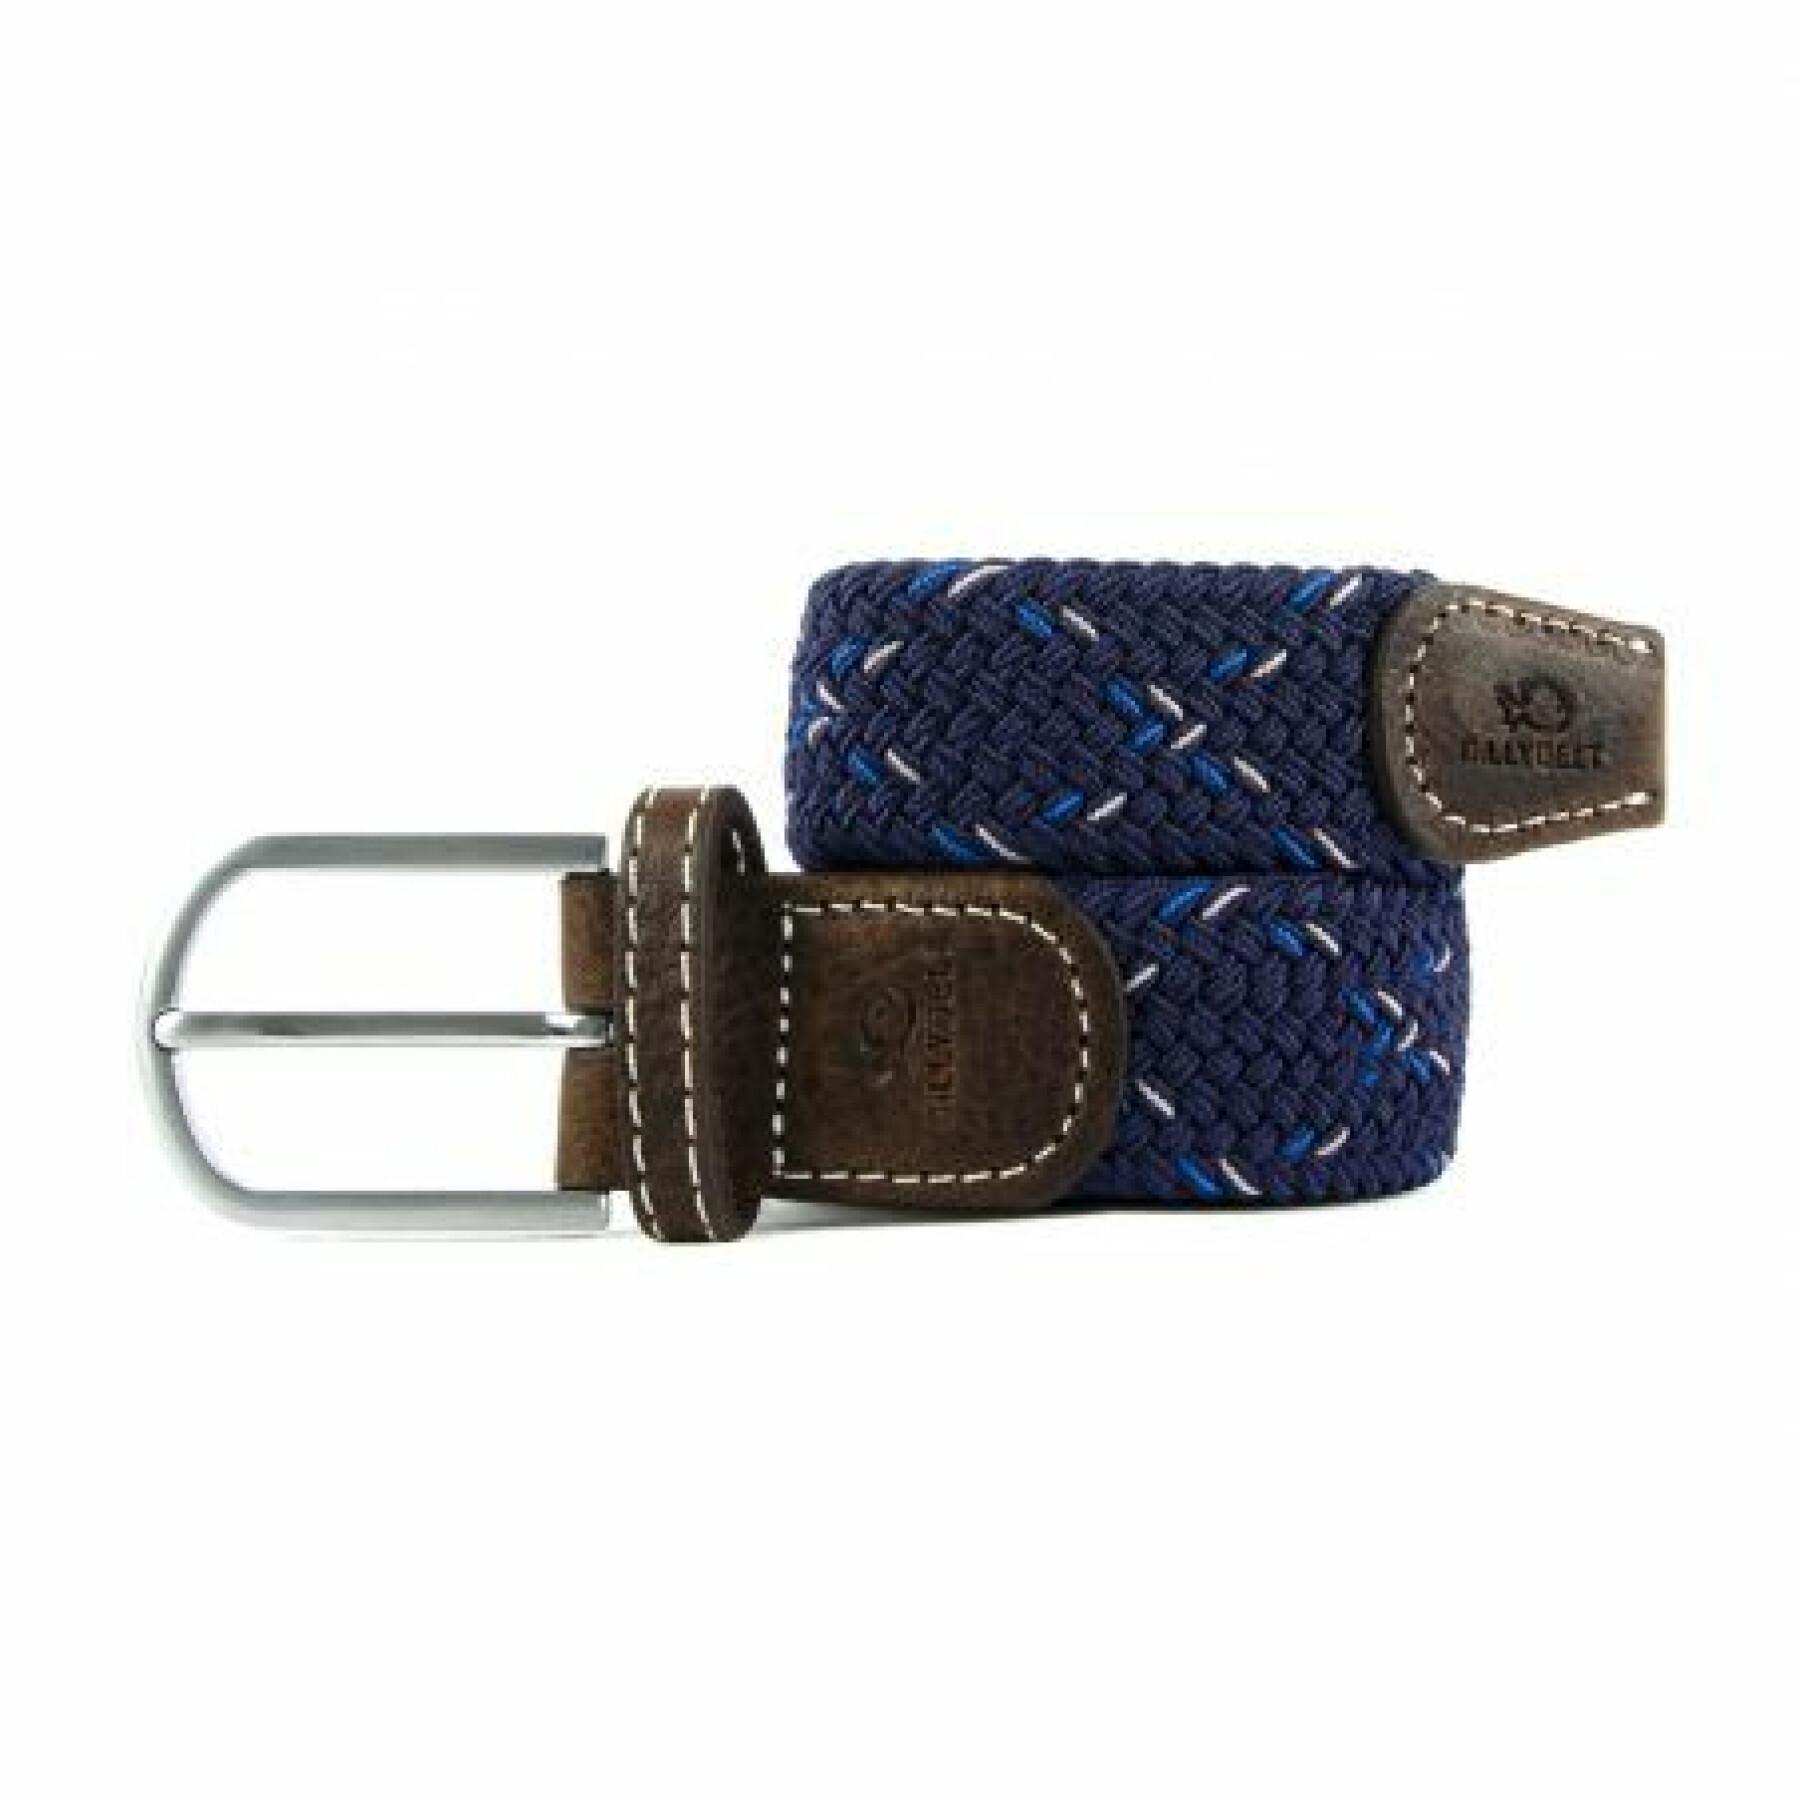 Elastic braided belt Billybelt La davao